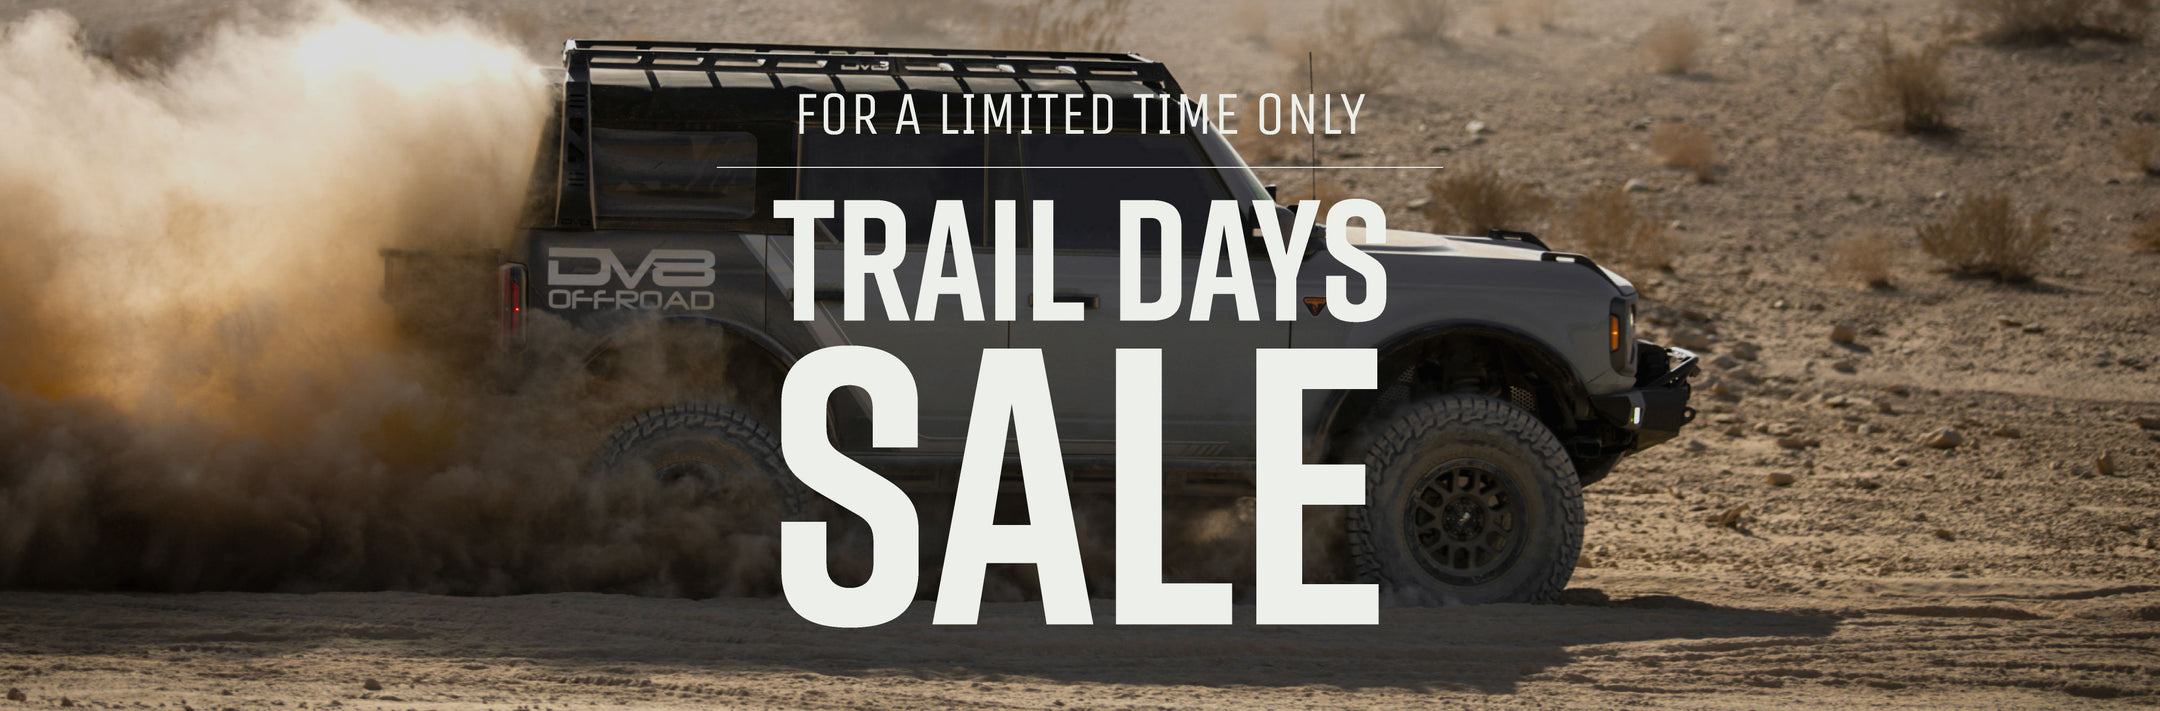 Trail Days Sale